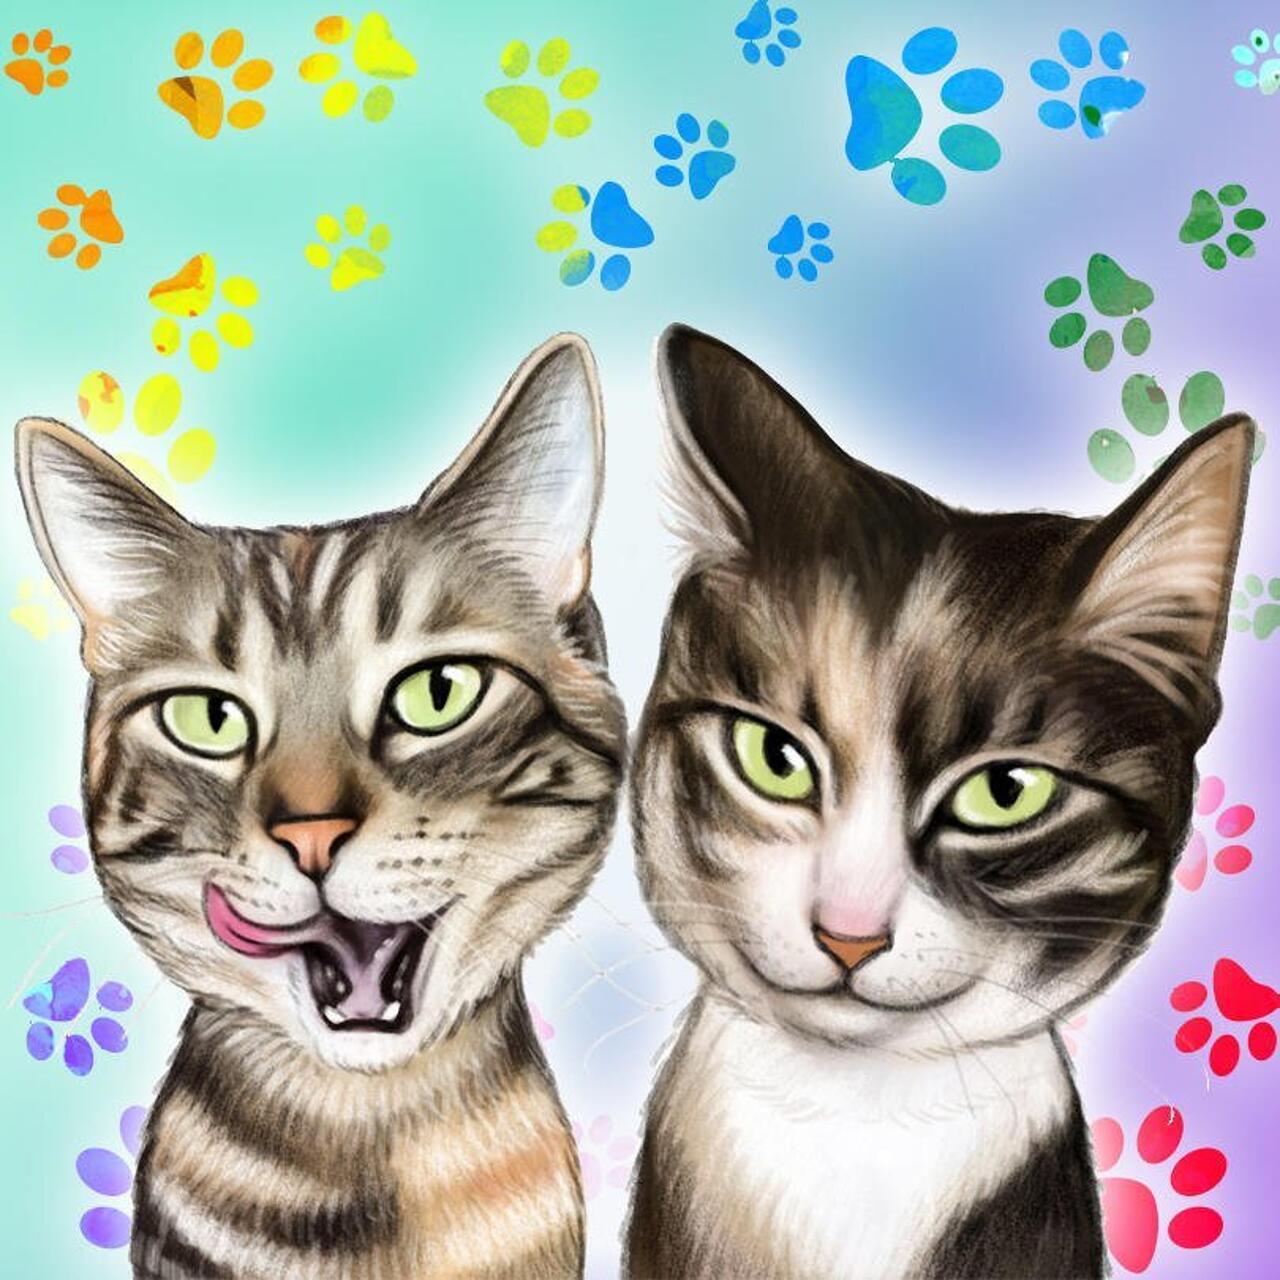 Pintura Digital gato pets (entregue via email)